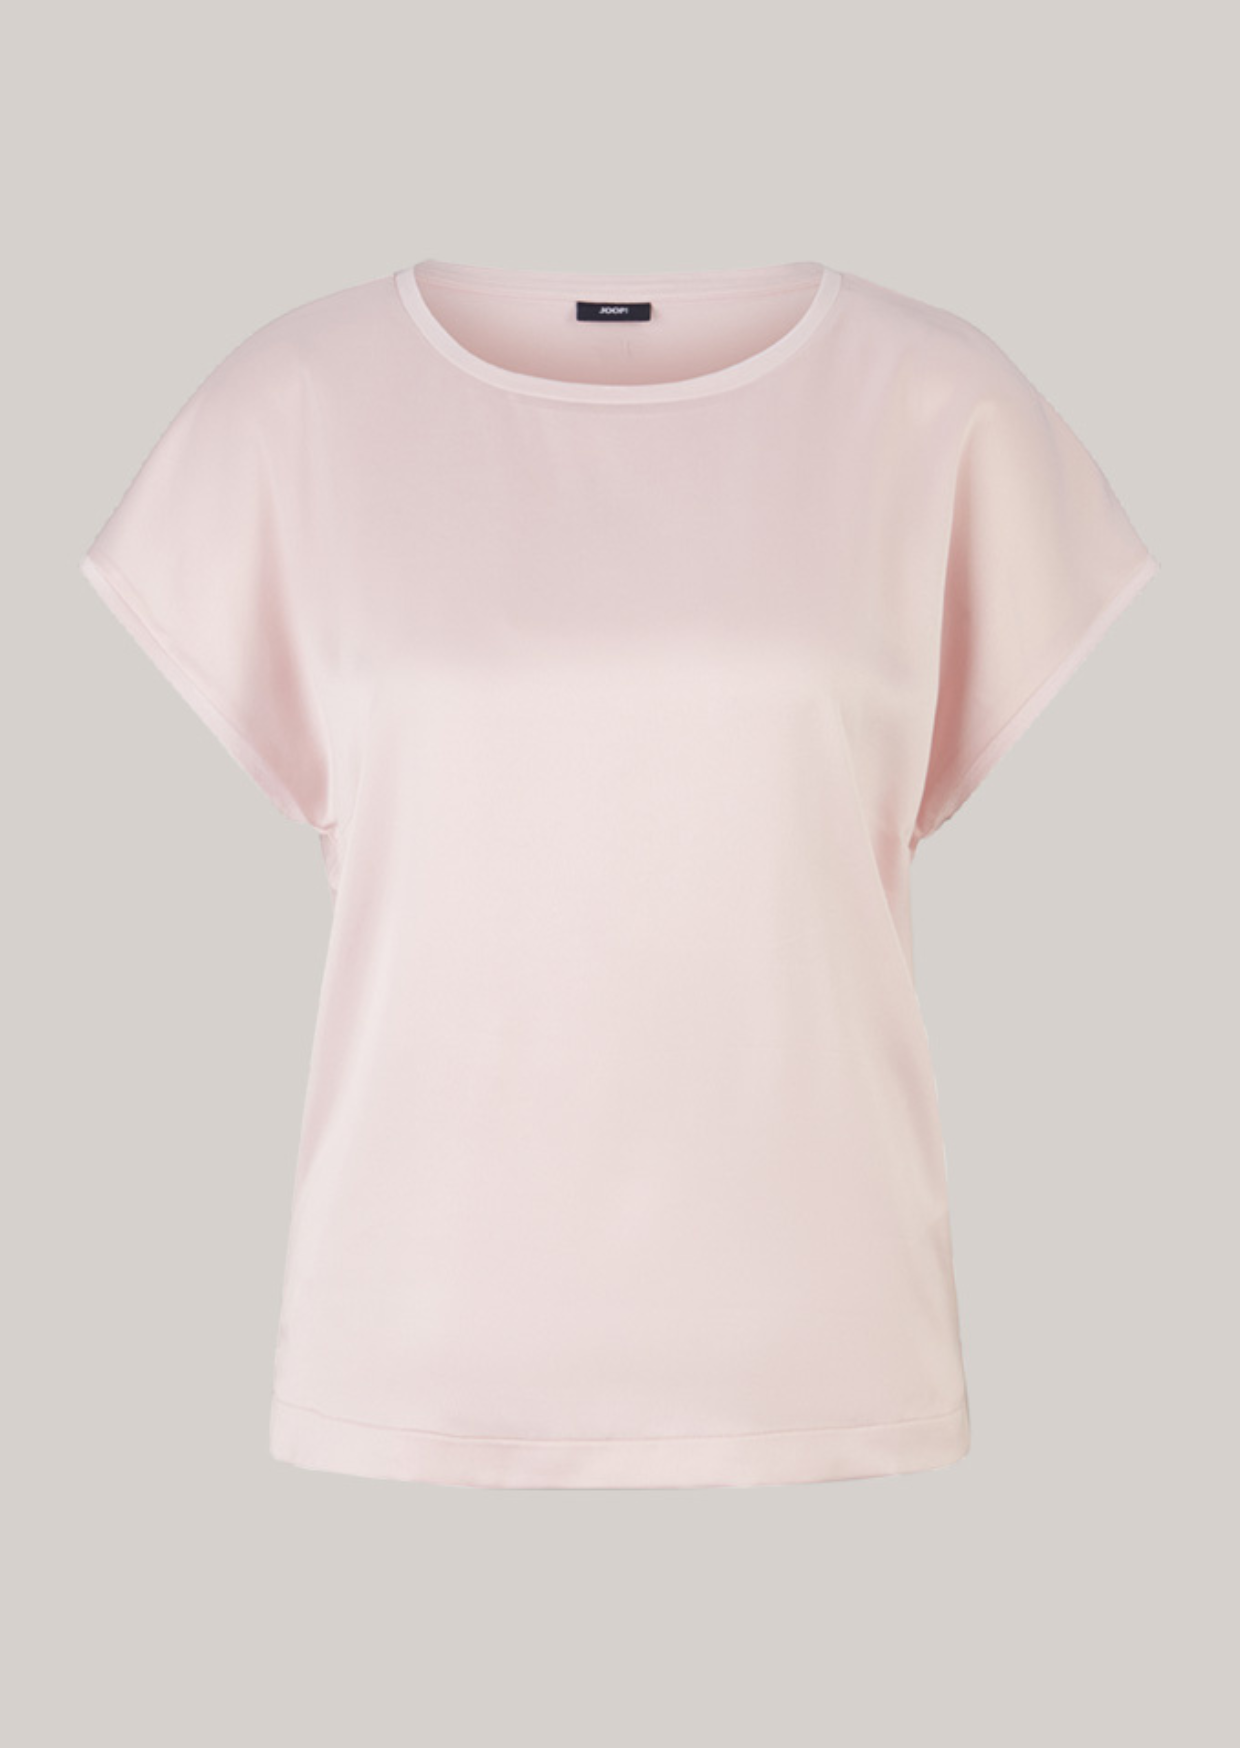 joop T-shirt pink 